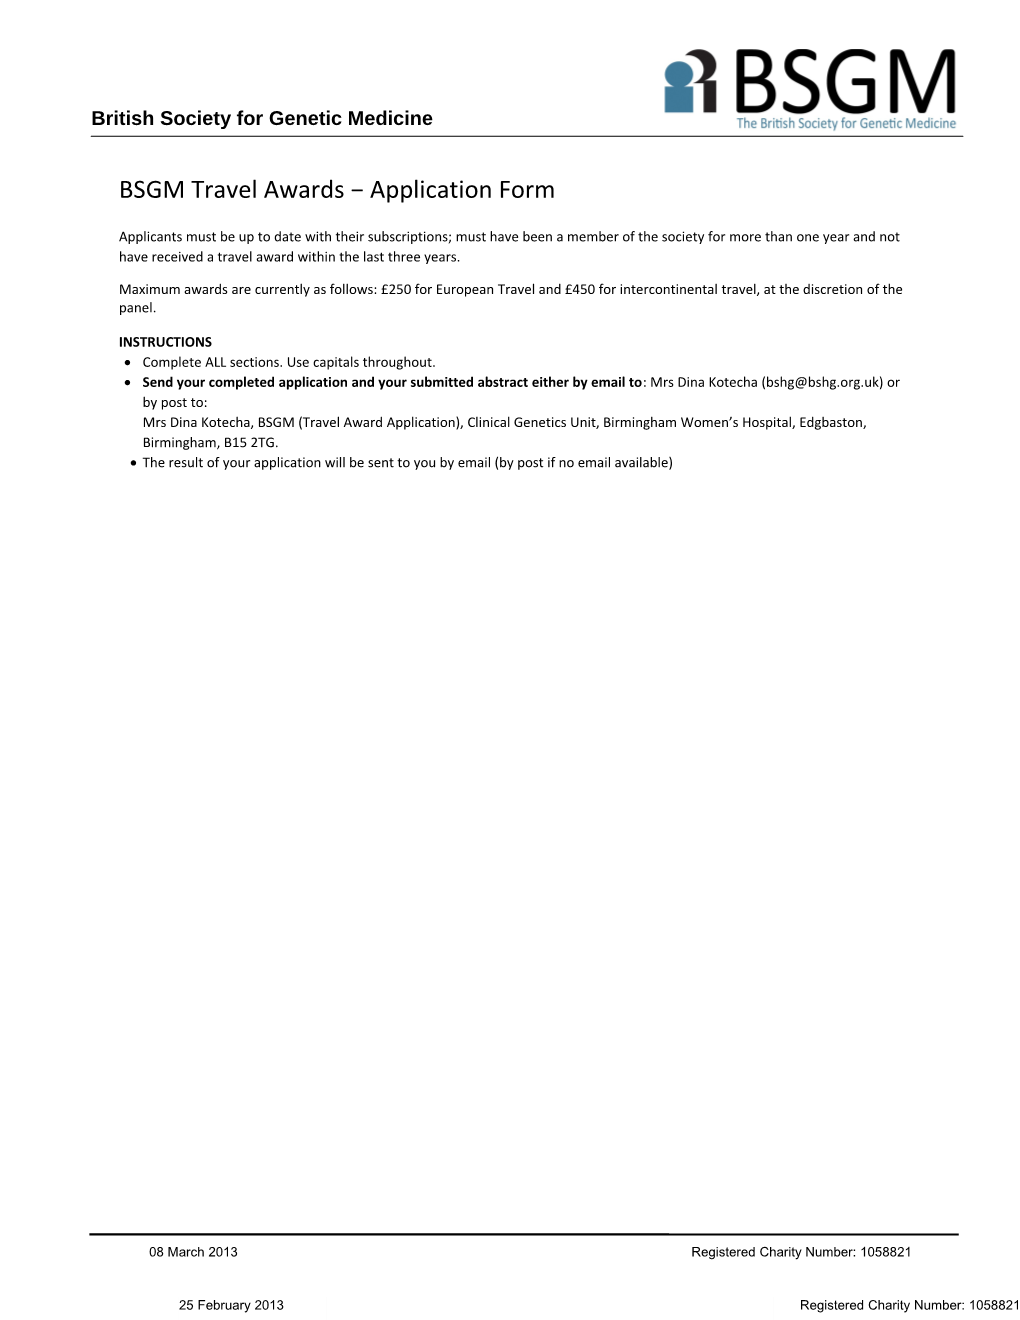 BSGM Travel Awards Application Form